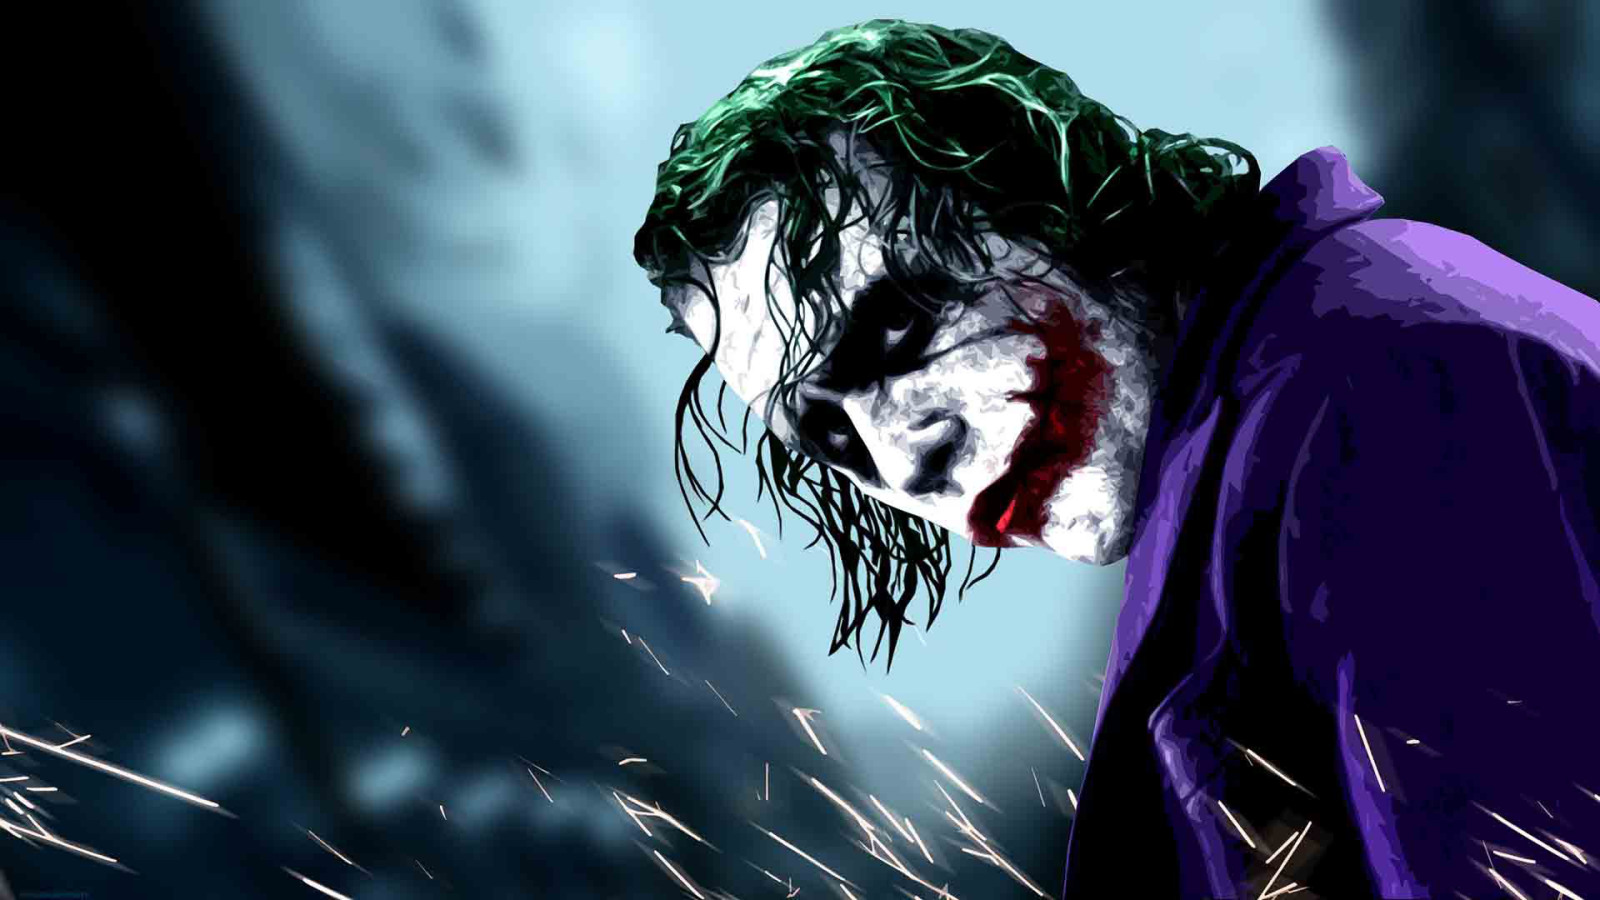 41+] Heath Ledger Joker Wallpaper HD - WallpaperSafari